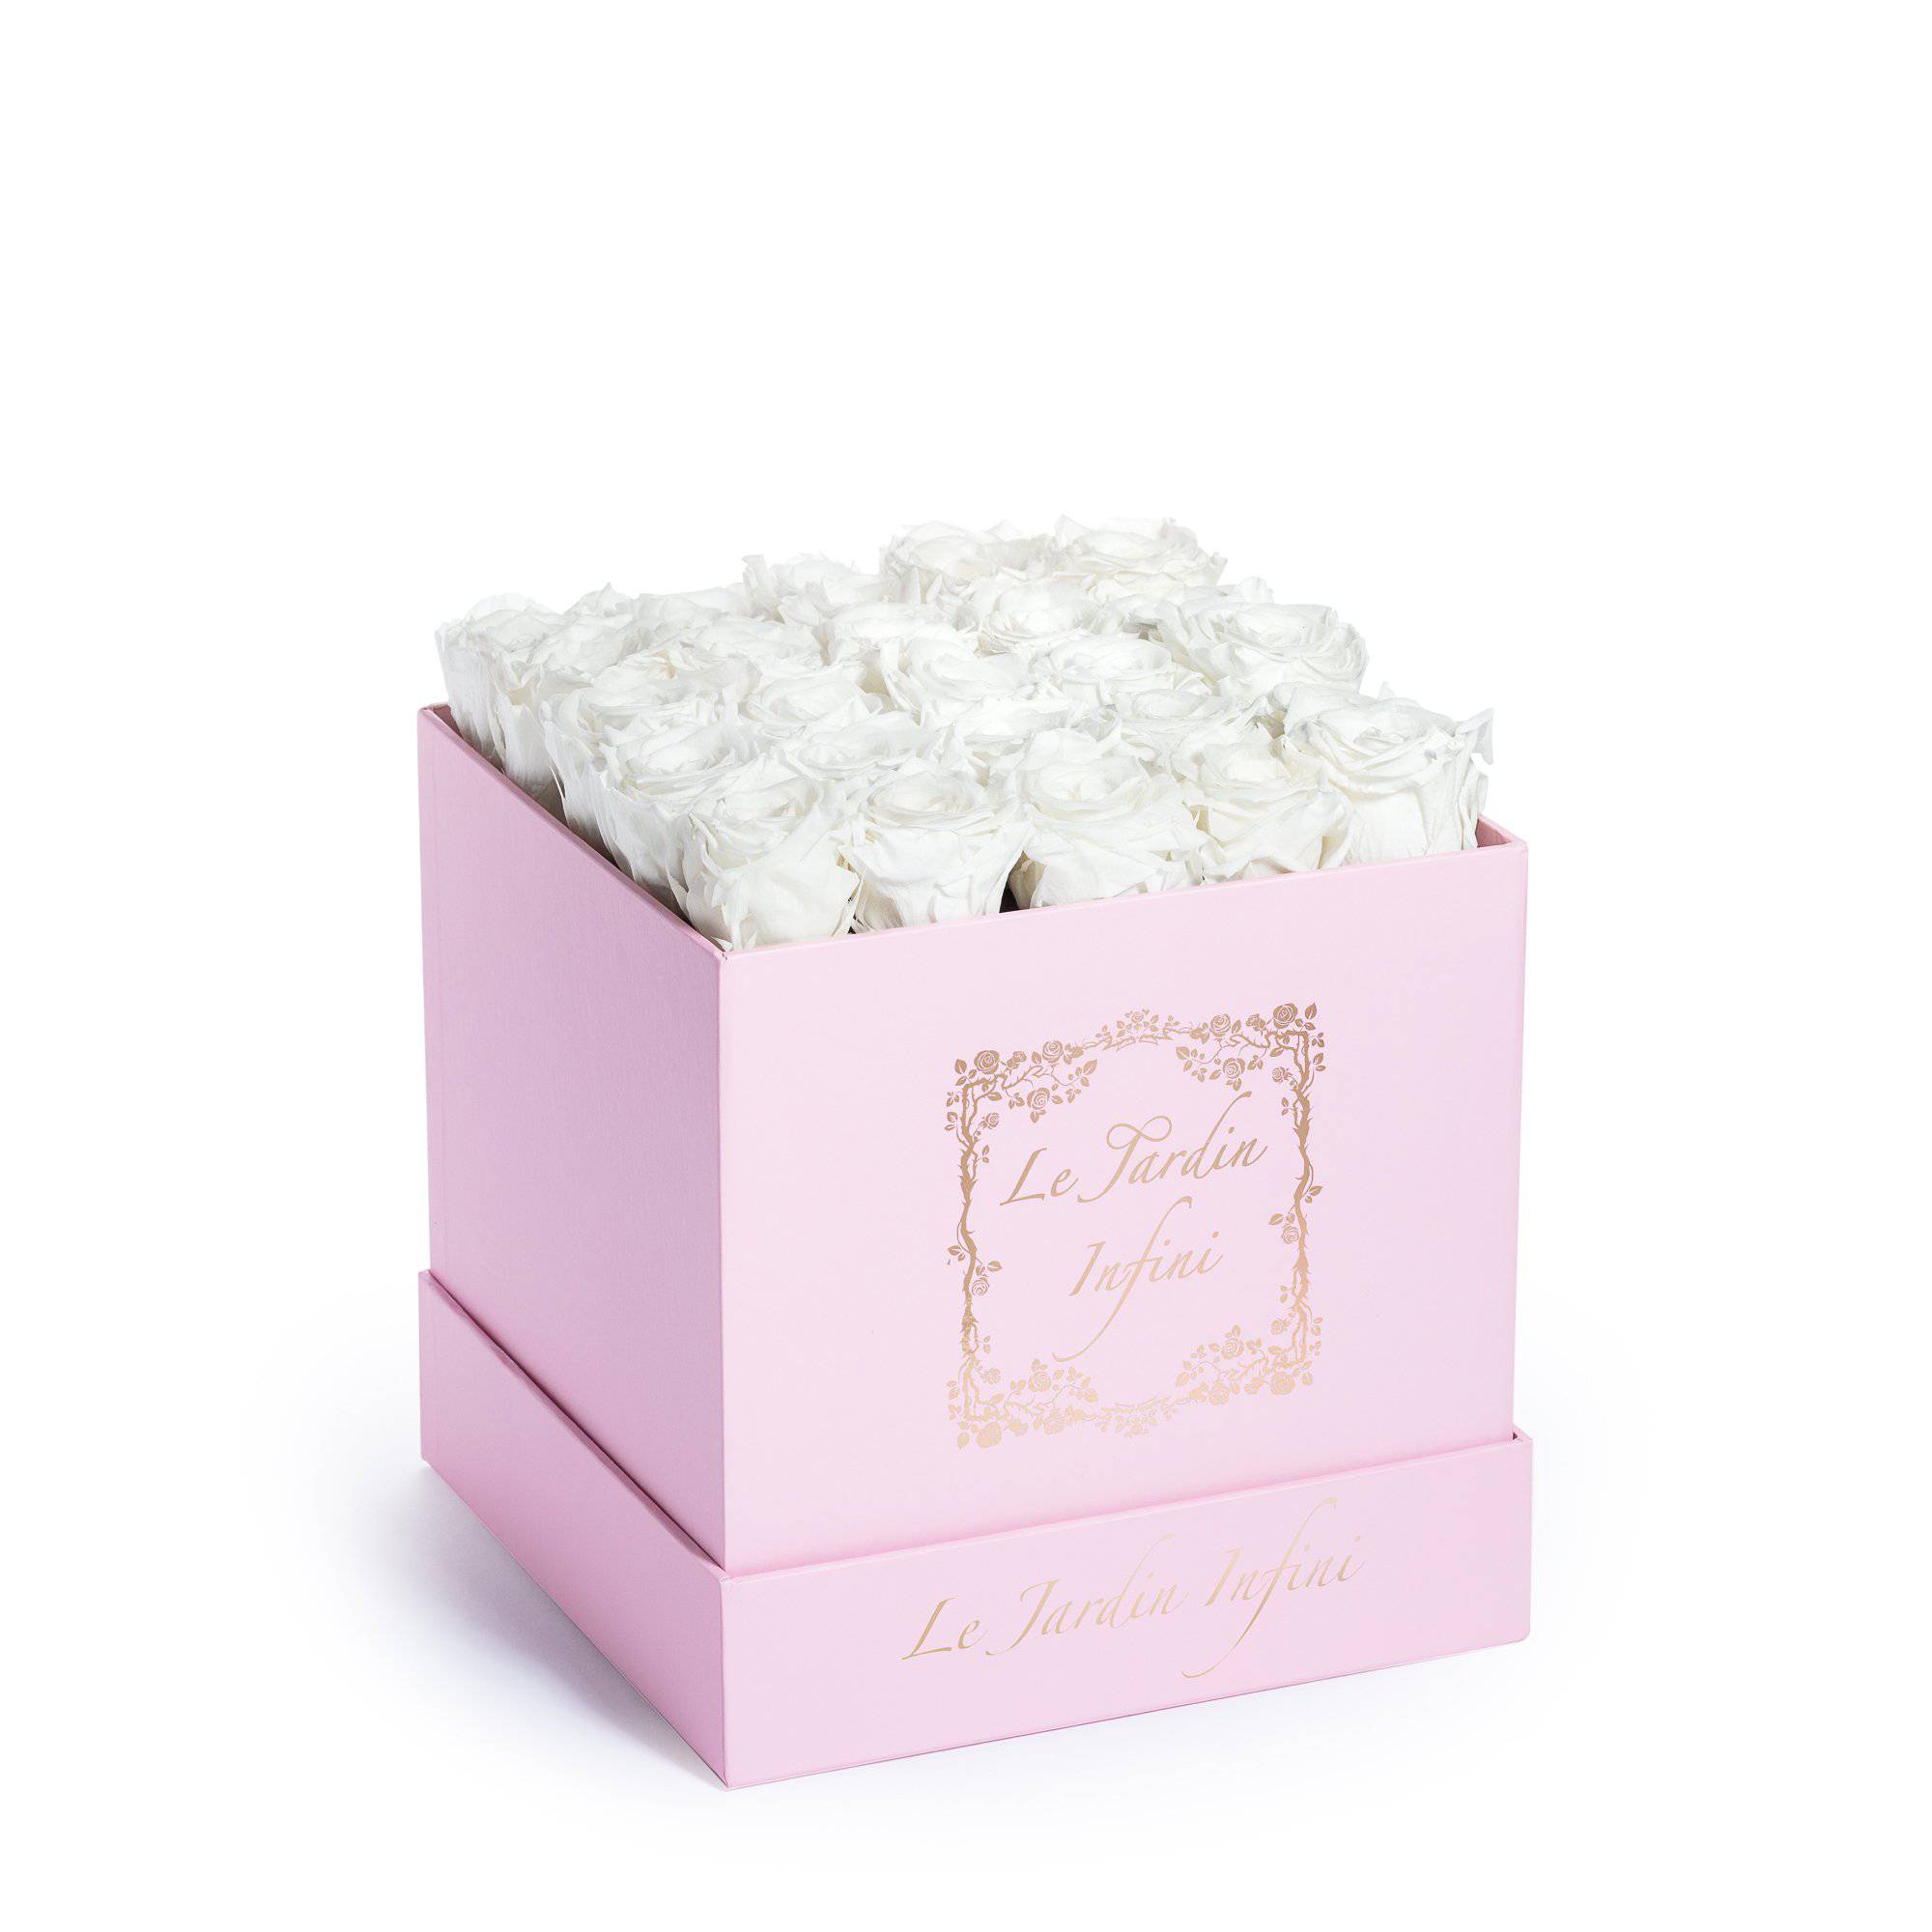 White Preserved Roses - Medium Square Pink Box - Le Jardin Infini Roses in a Box